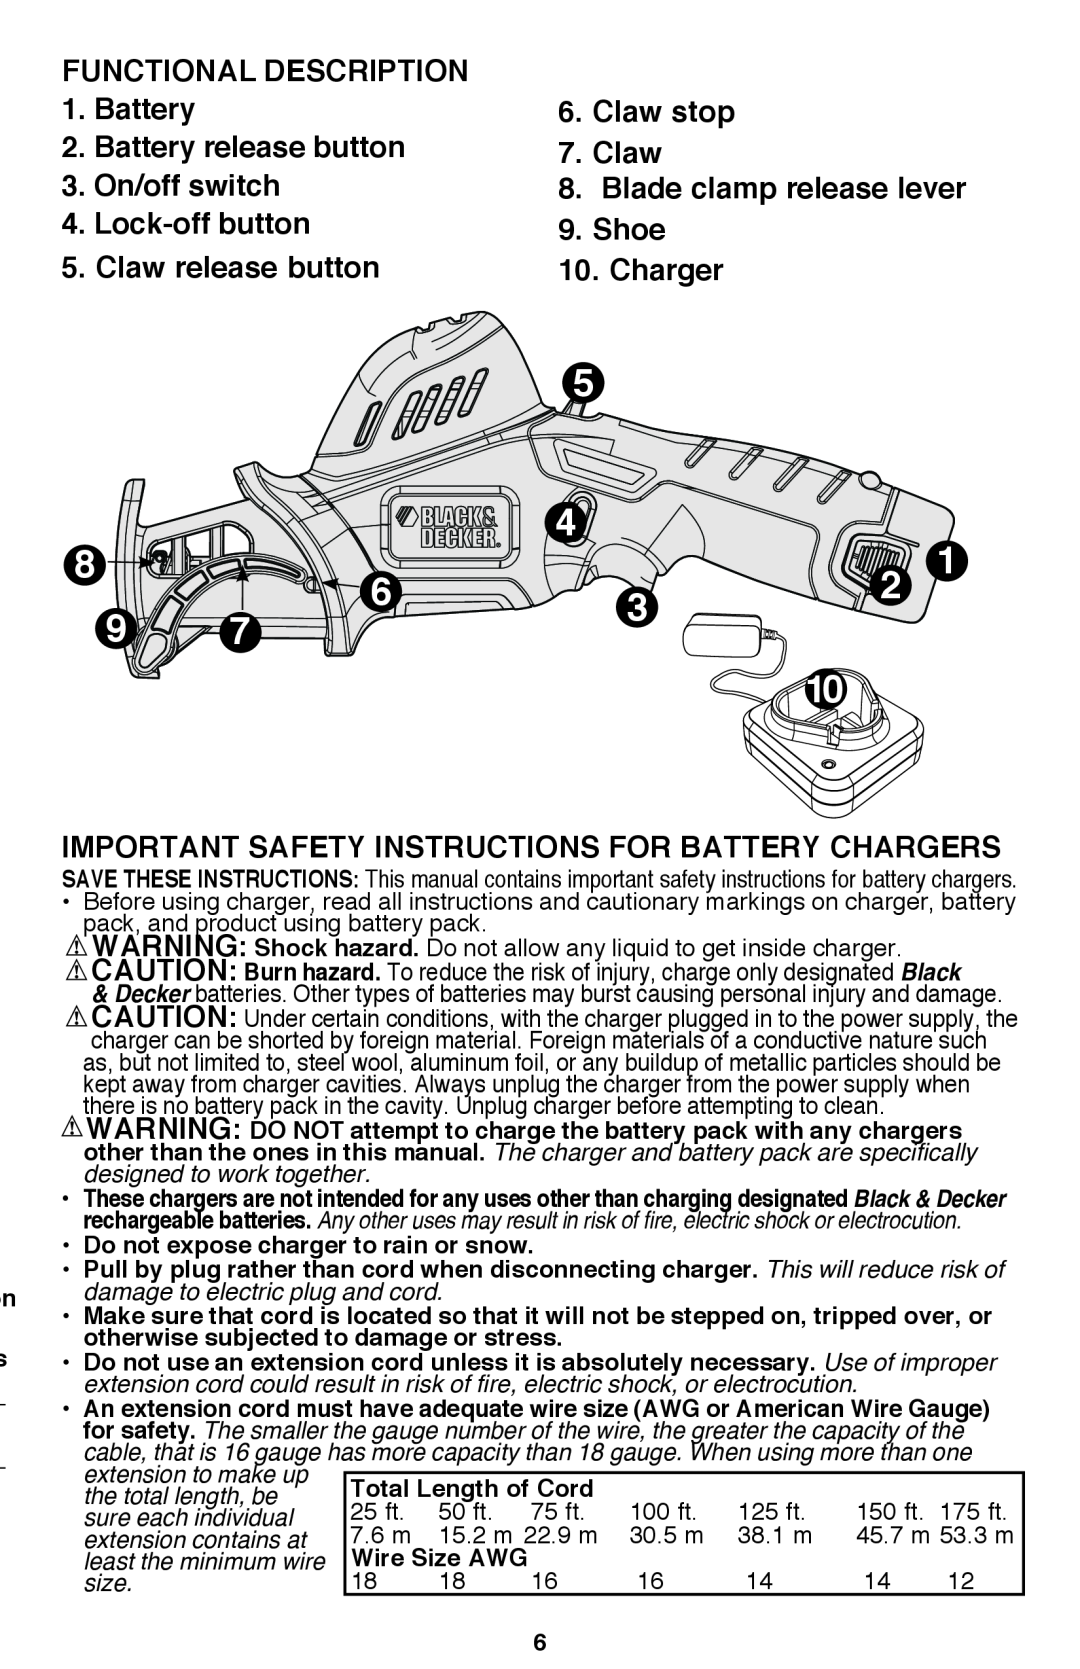 Black & Decker PSL12 instruction manual Functional Description 1. Battery 2. Battery release button 